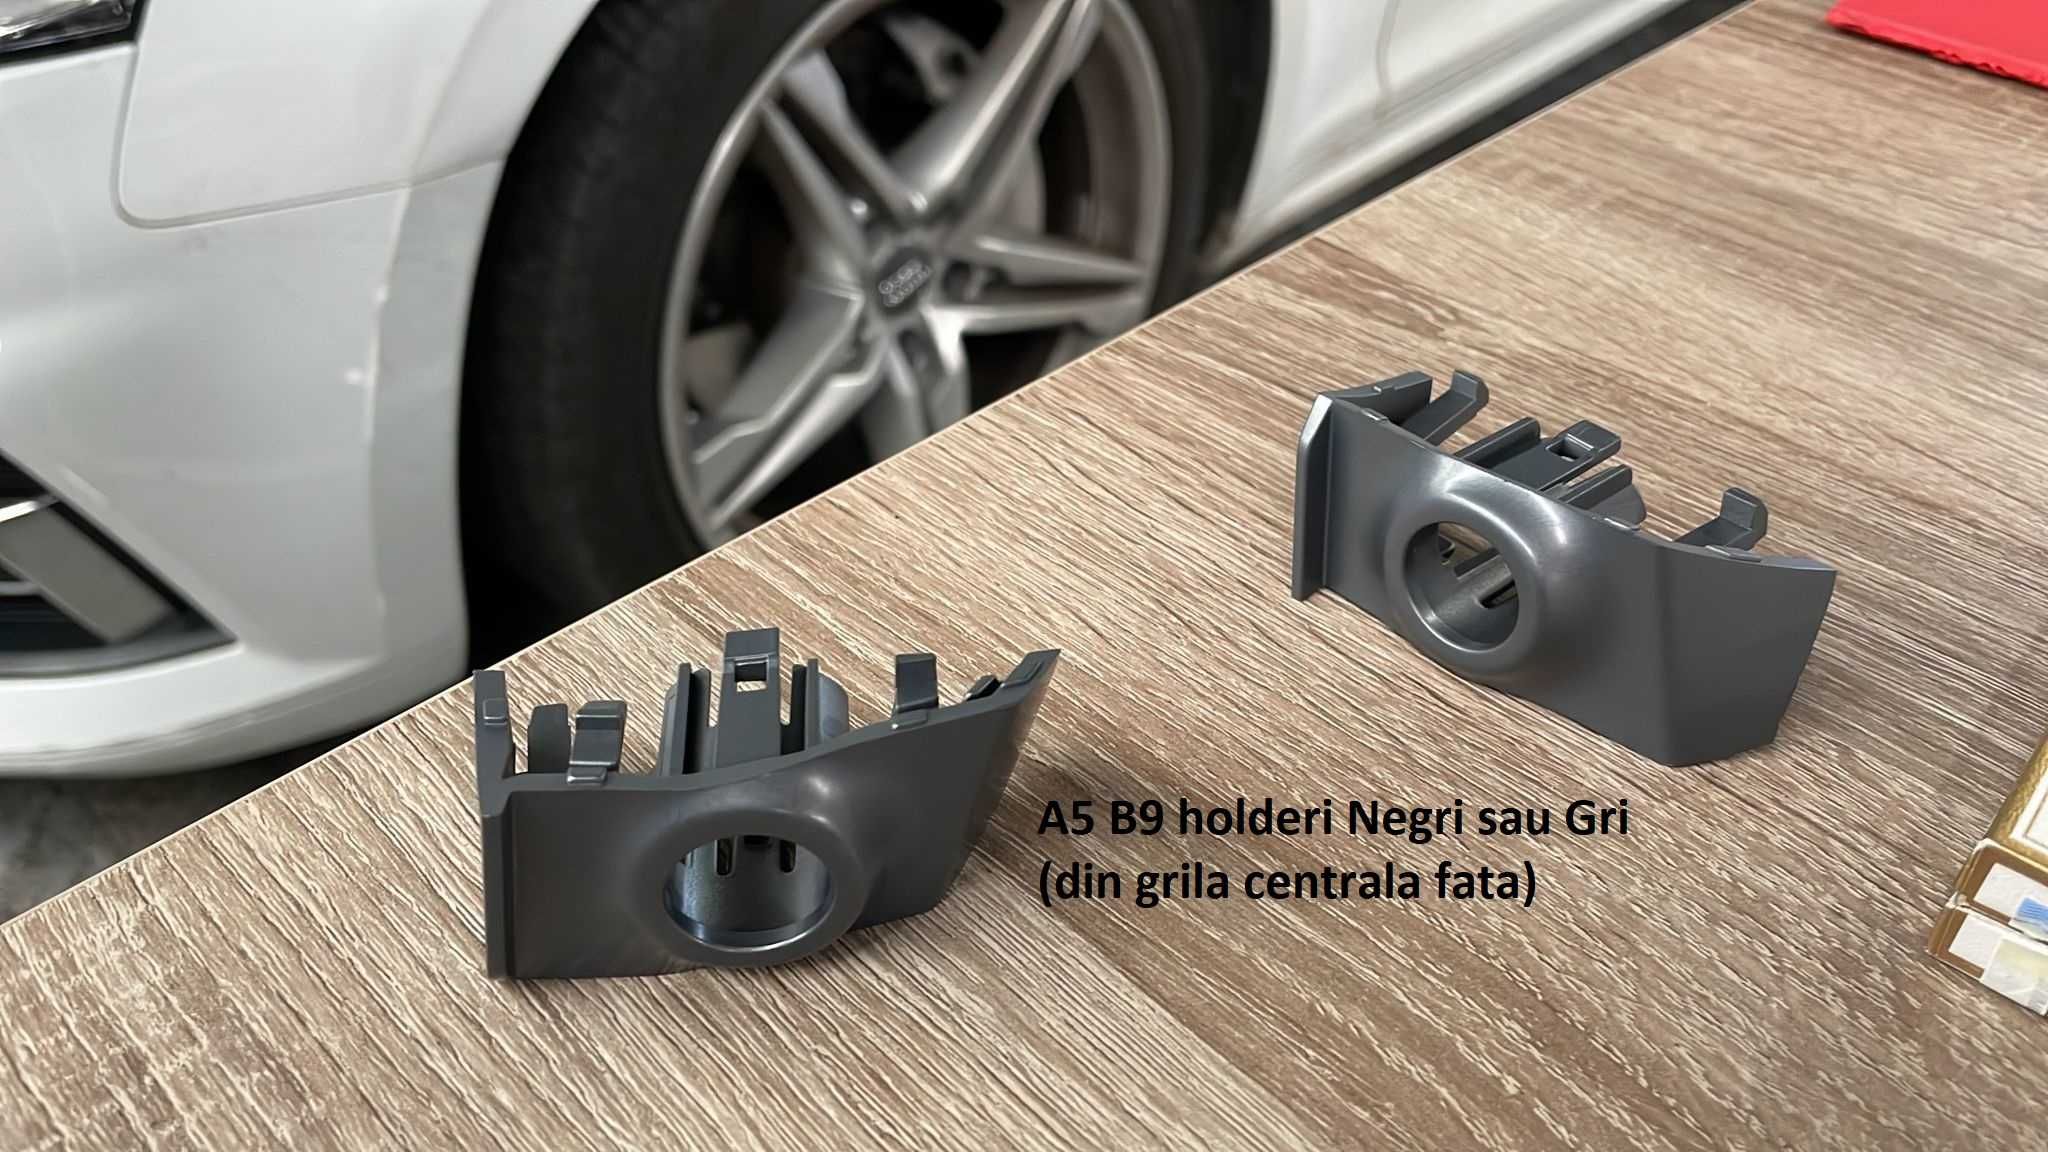 KIT Senzori parcare: Fata Spate PLA 2.0 Audi model A4 A5 B9 Q5 Q3 Q2